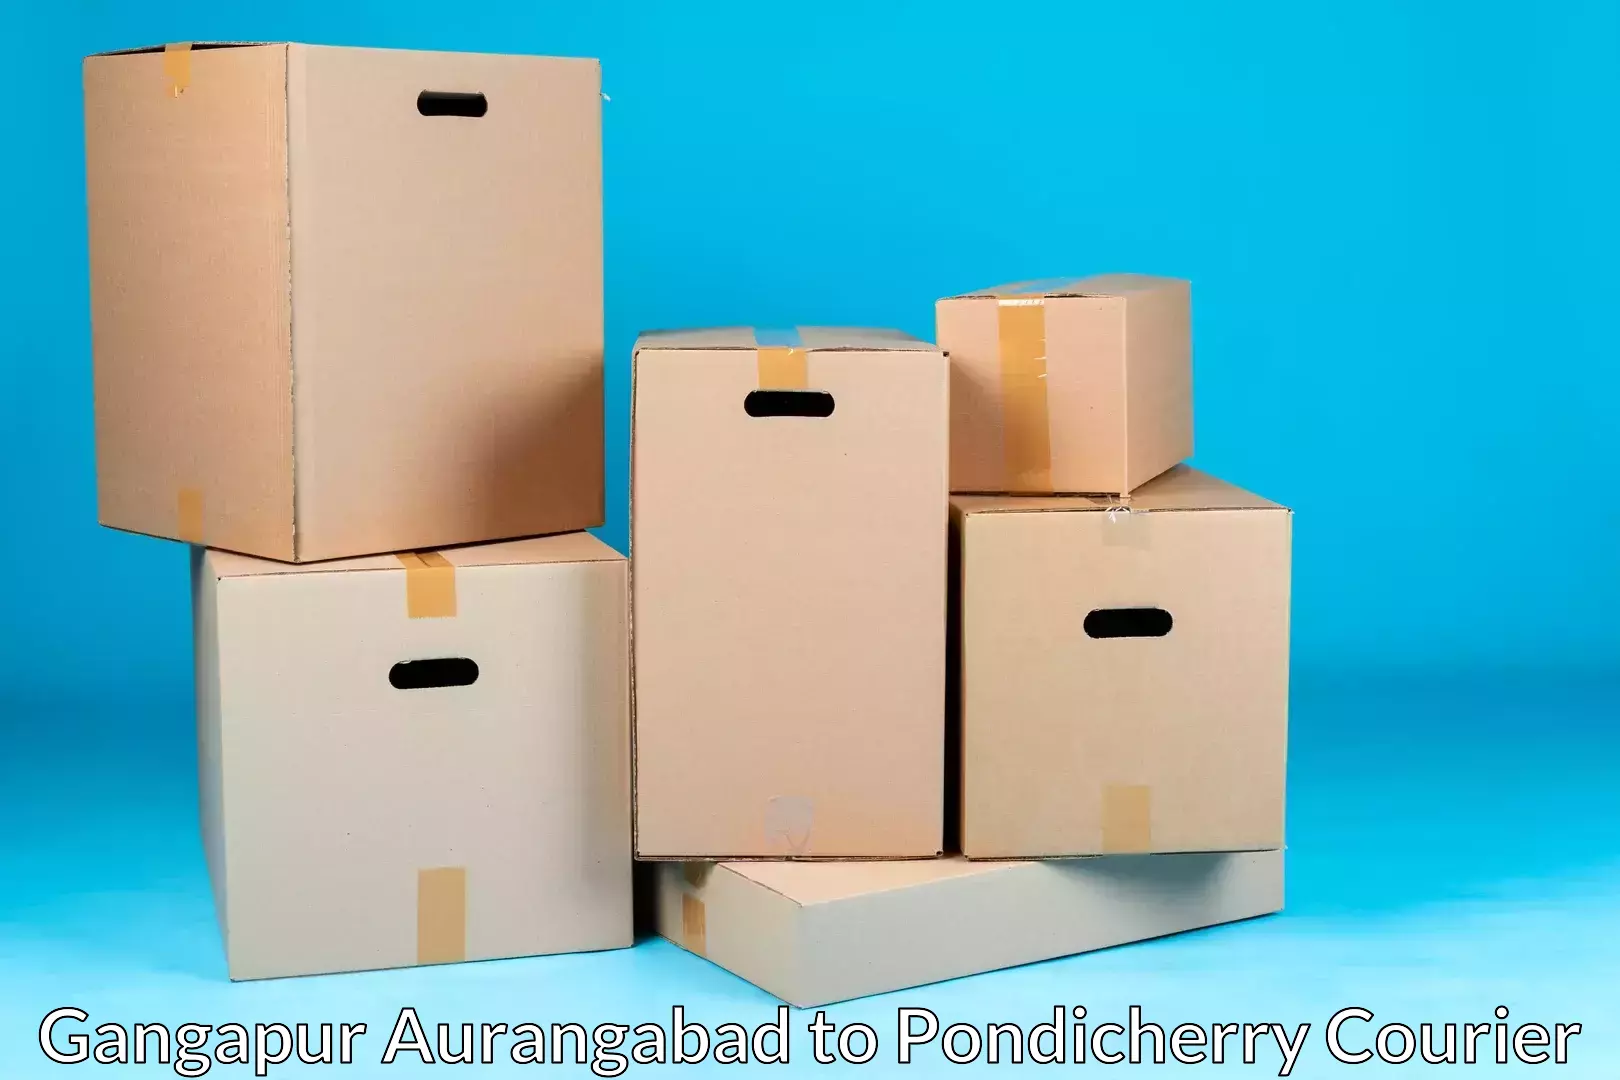 Furniture delivery service Gangapur Aurangabad to Pondicherry